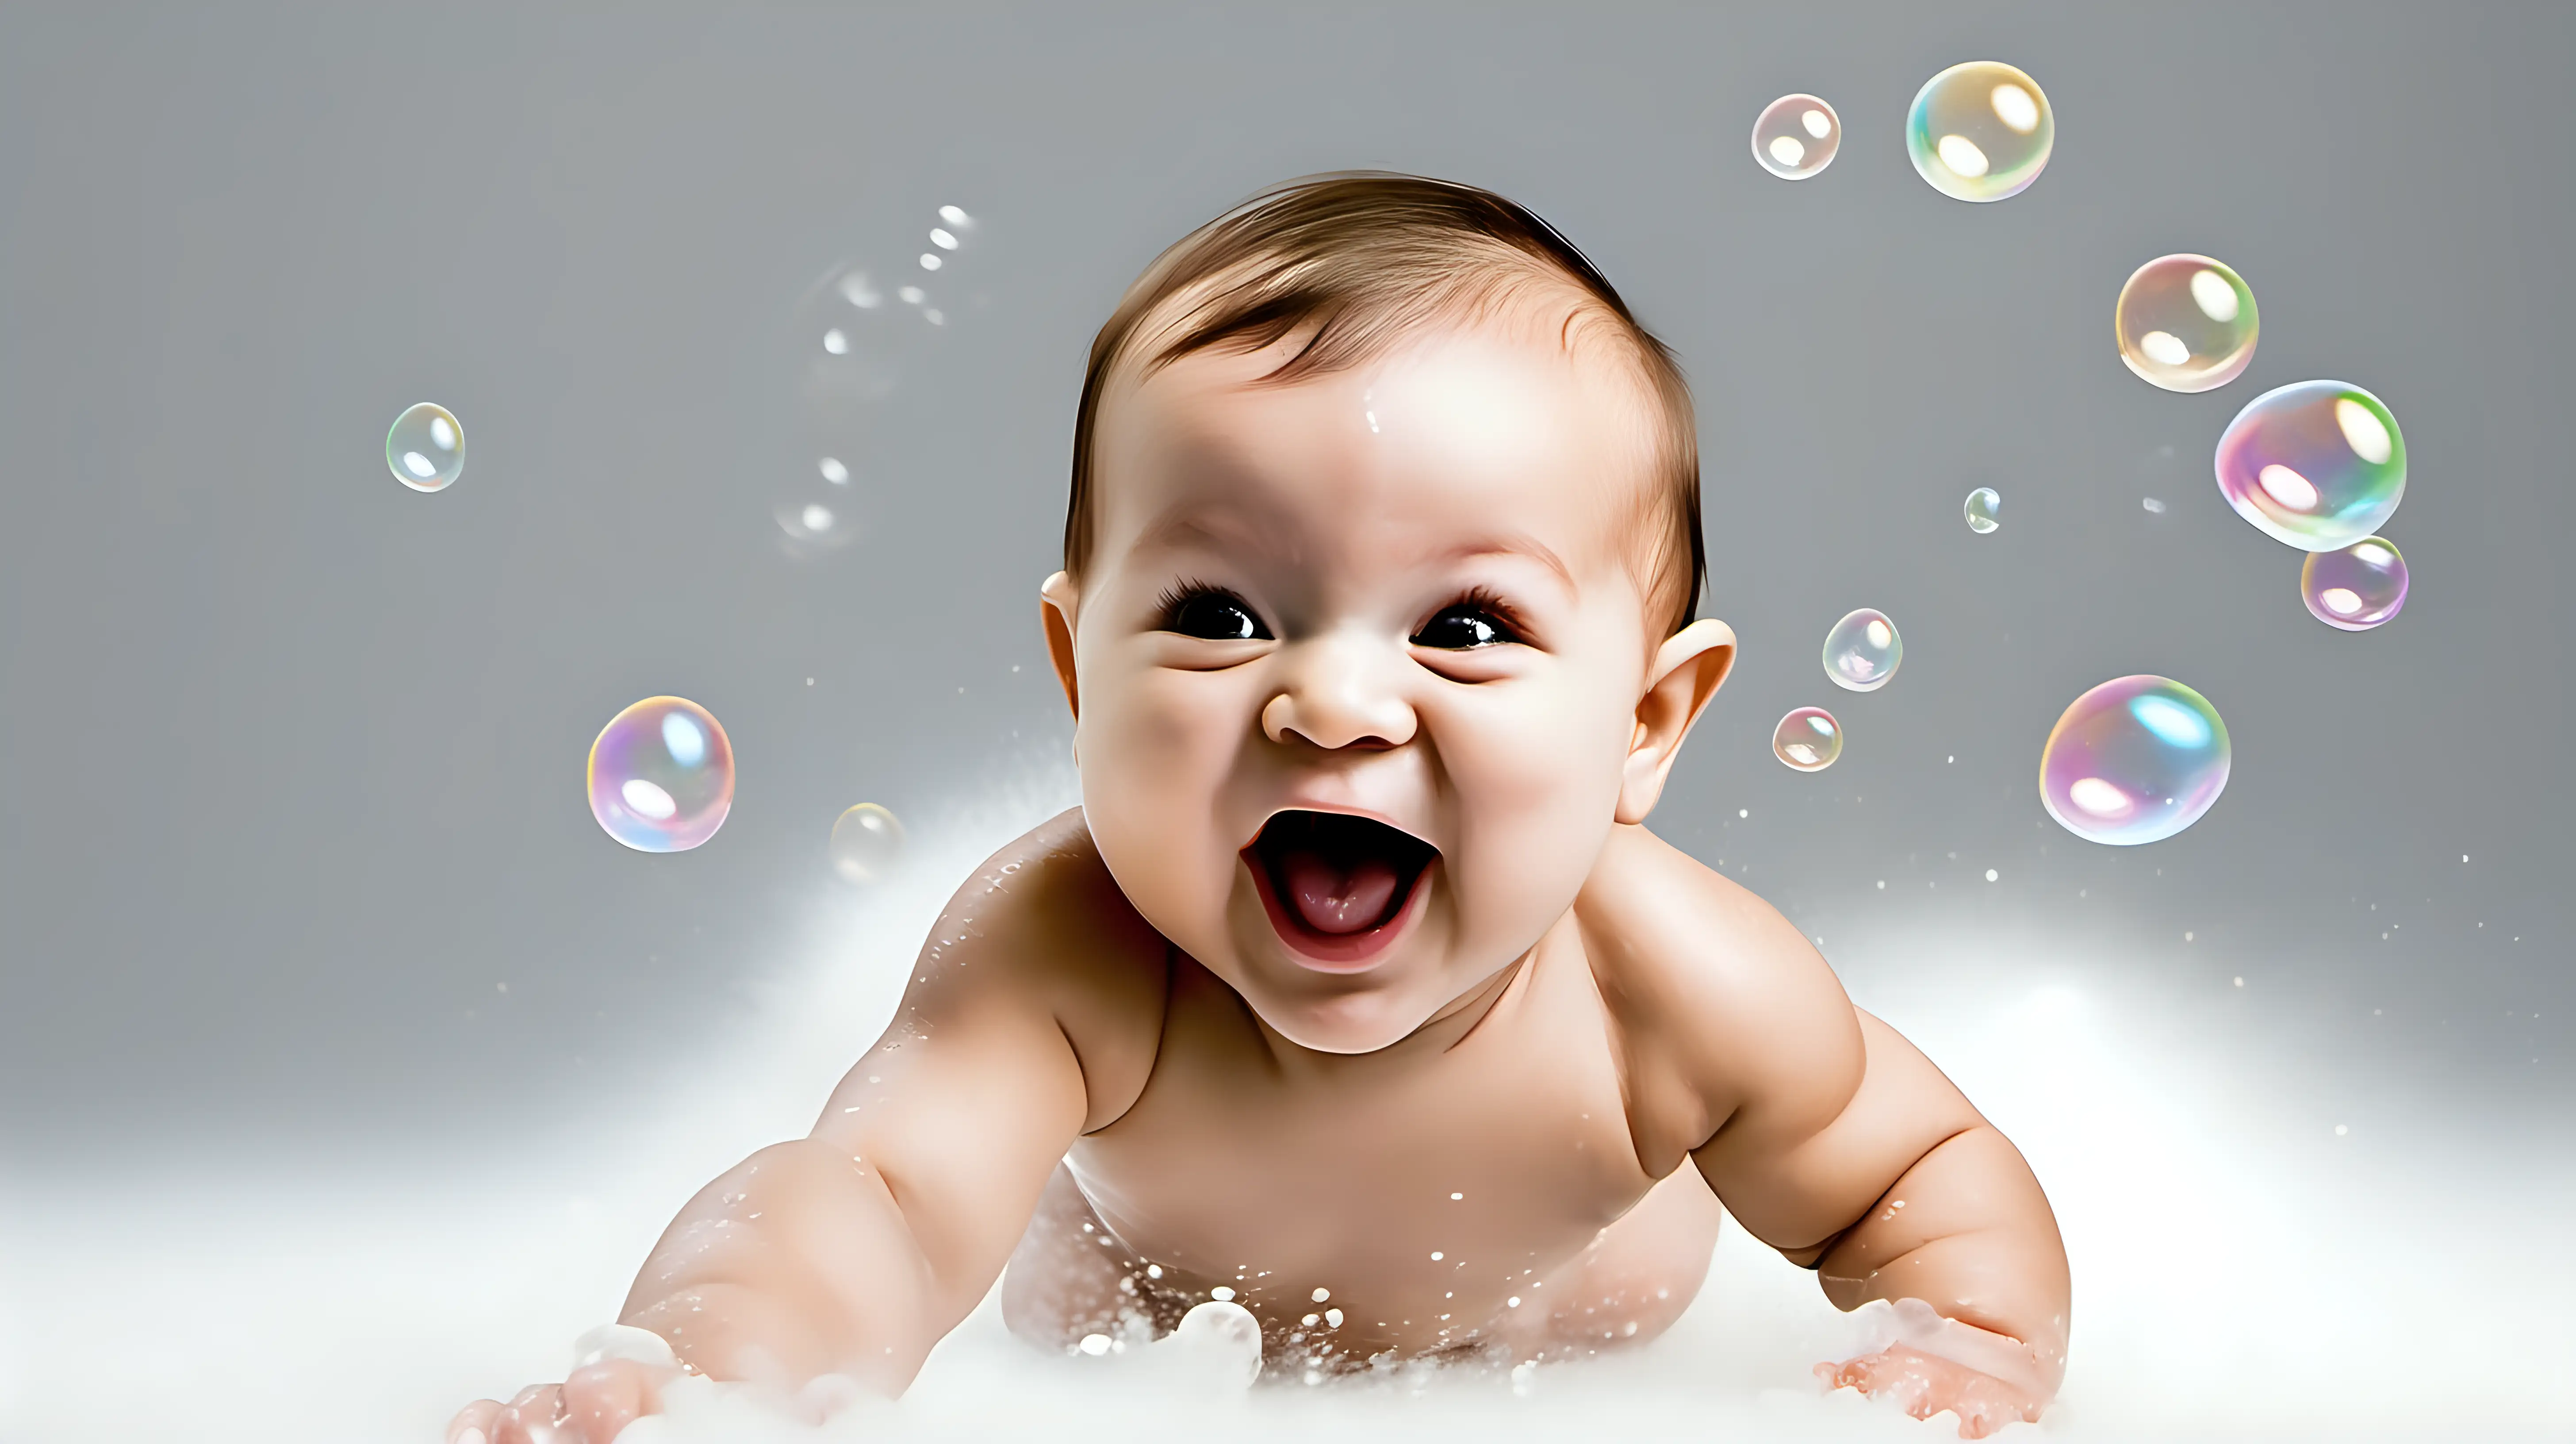 Joyful Baby Chasing Bubbles Delightful Infant Happiness